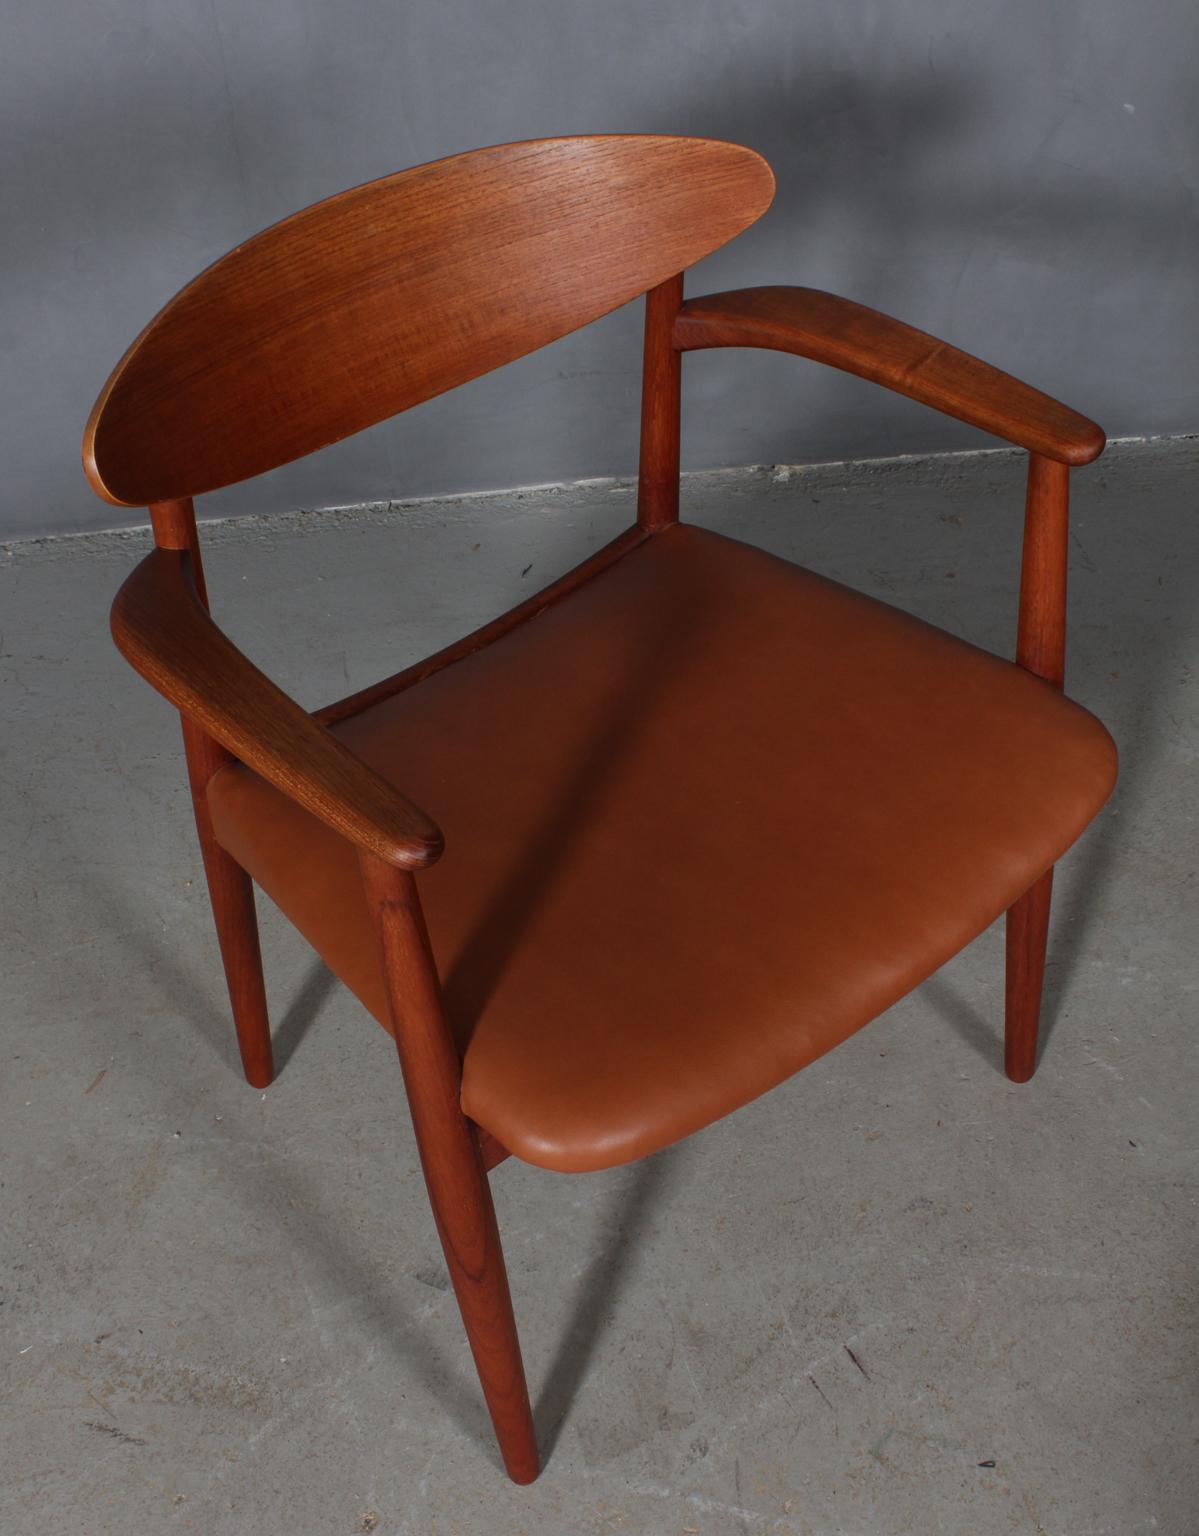 Einer Larsen & Aksel Bender Madsen armchair new upholstered with tan aniline leather.

Frame of teak.

Model 1656, made by Næstved Møbelfabrik.